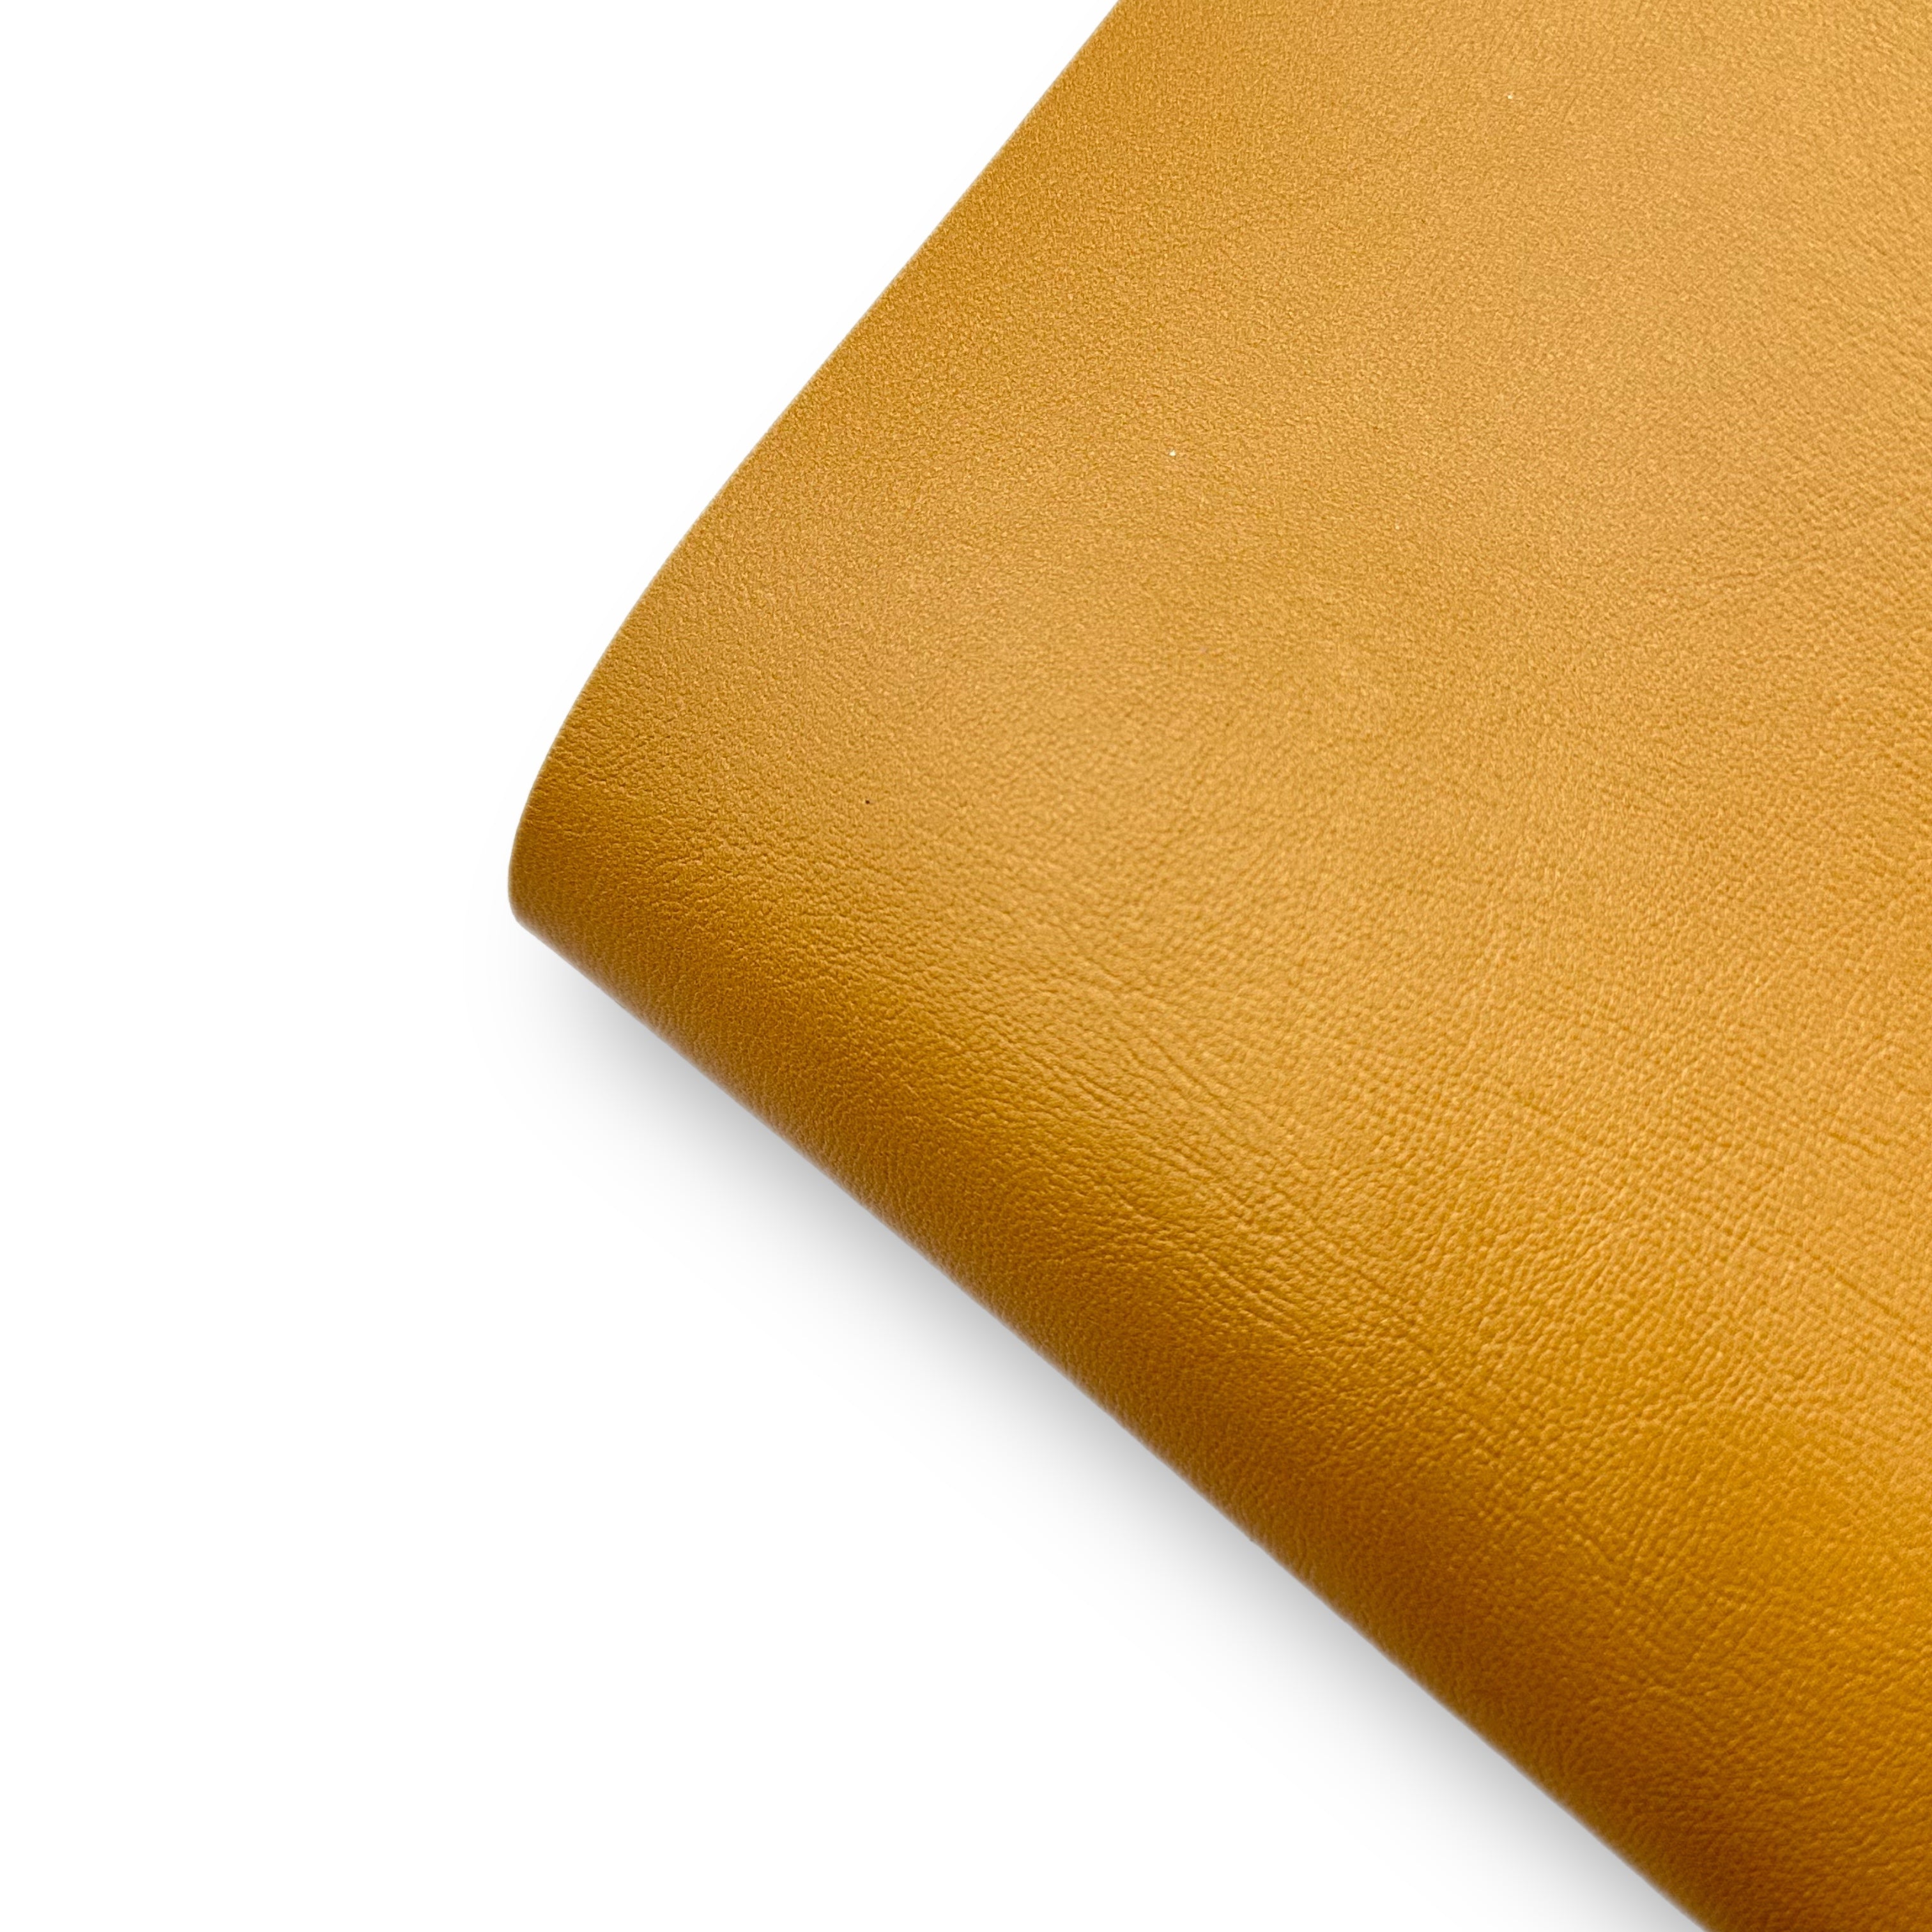 Gingerbread House Core Colour Premium Faux Leather Fabric Sheets